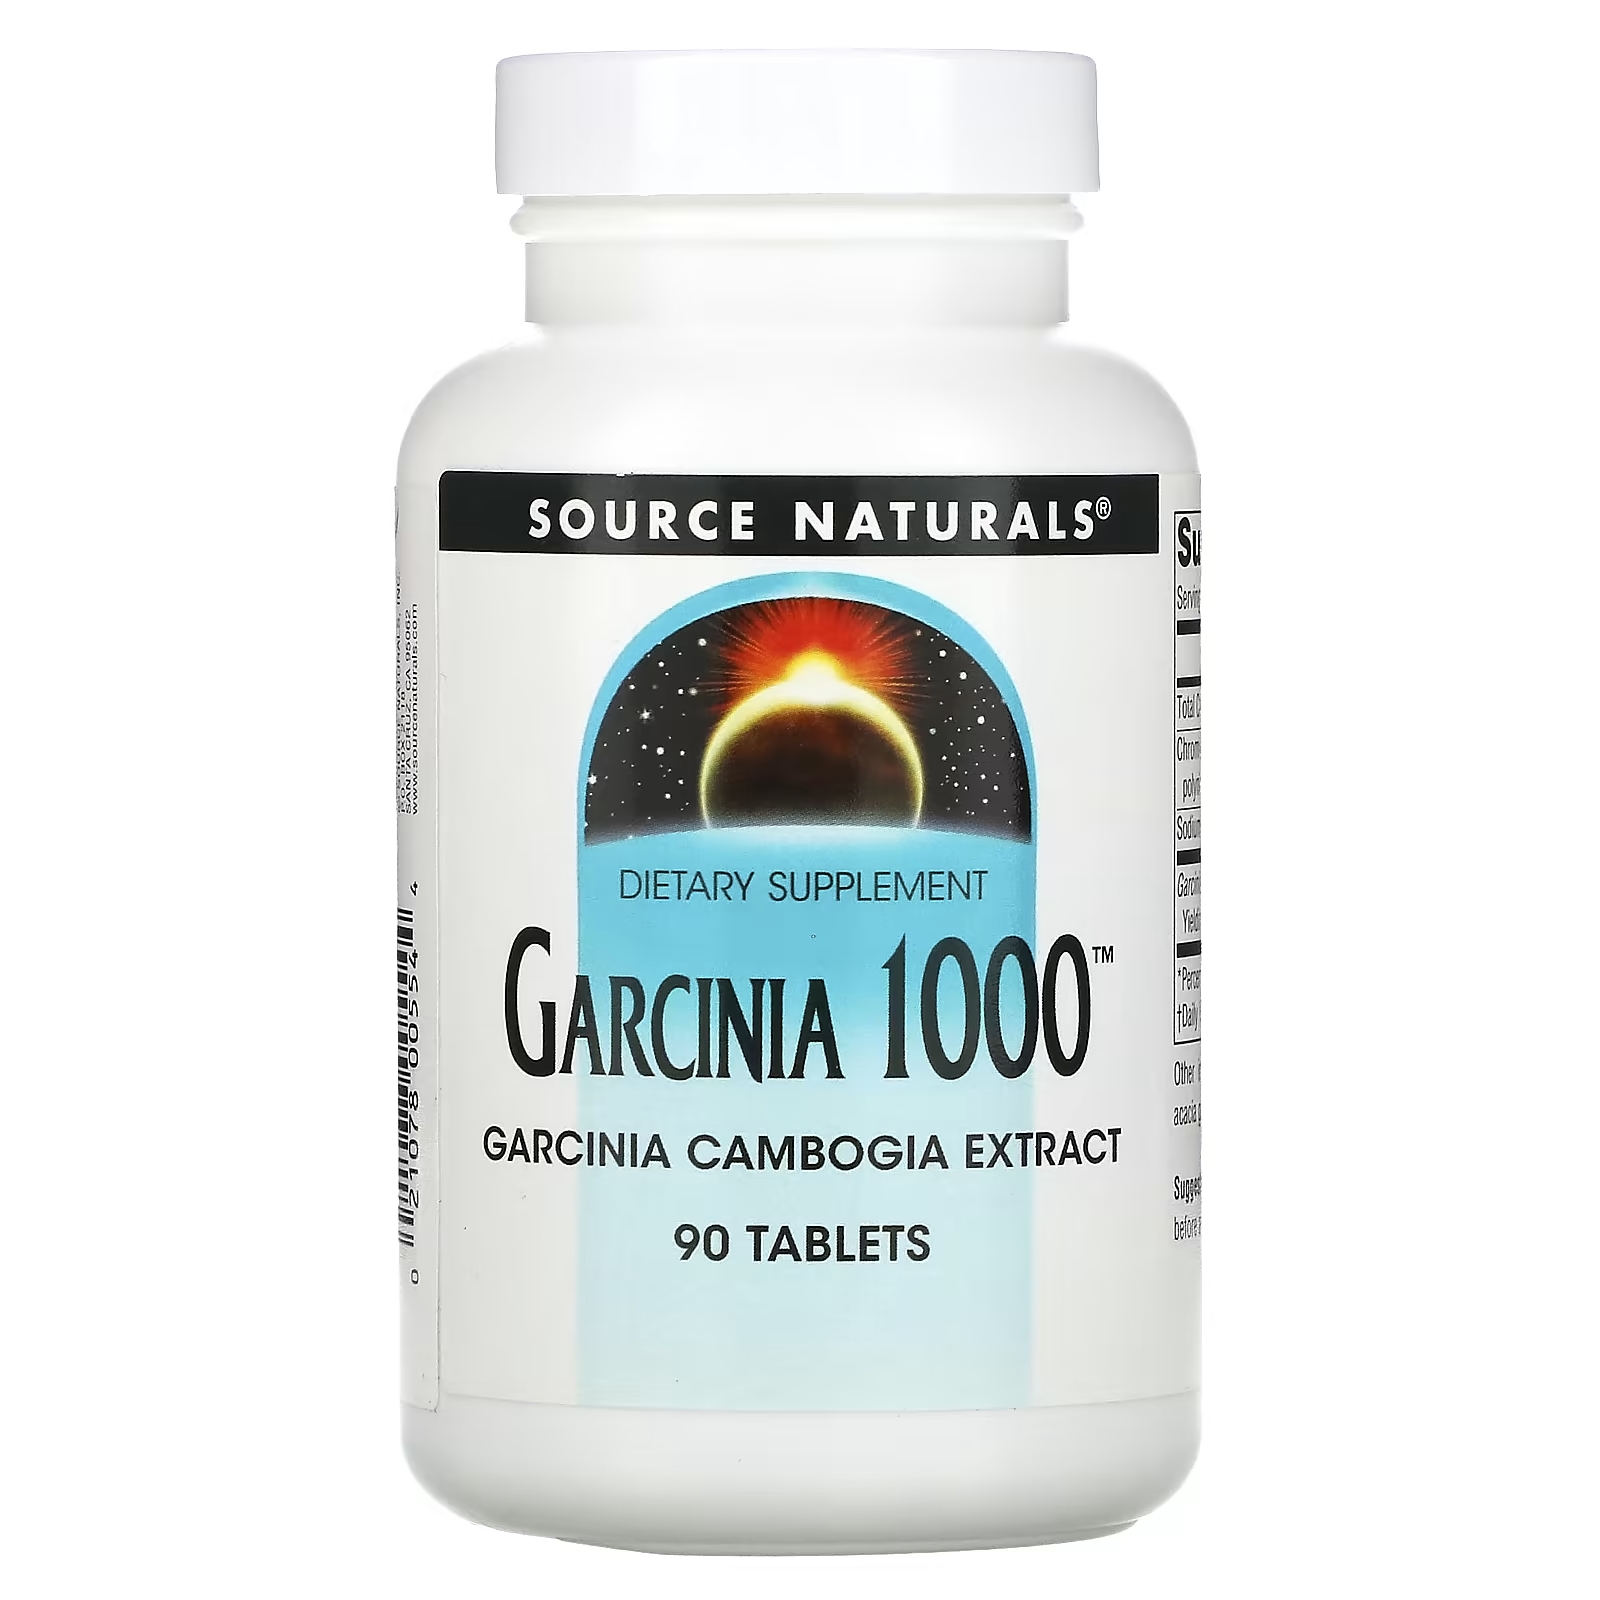 Source Naturals Гарциния 1000 Garcinia 1000, 90 таблеток